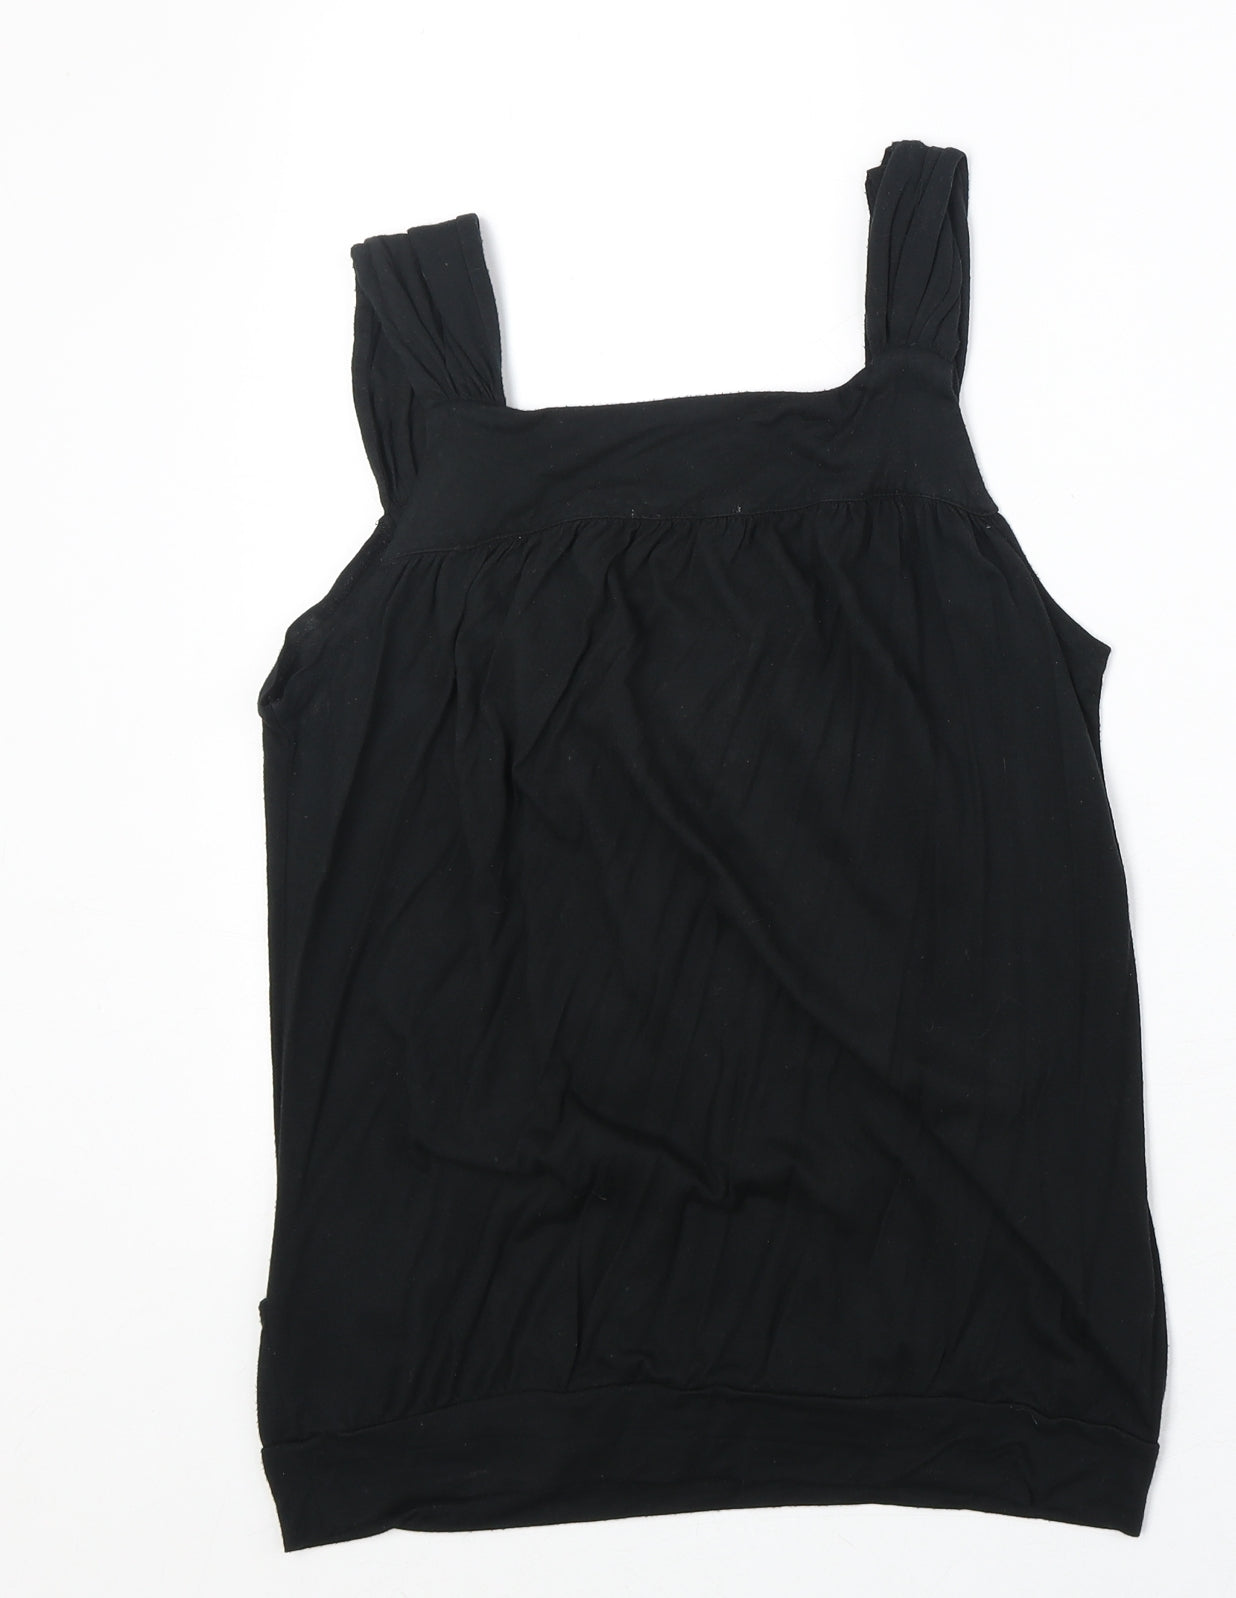 John Rocha Womens Black Polyester Basic Tank Size 12 Scoop Neck - Wrap Style